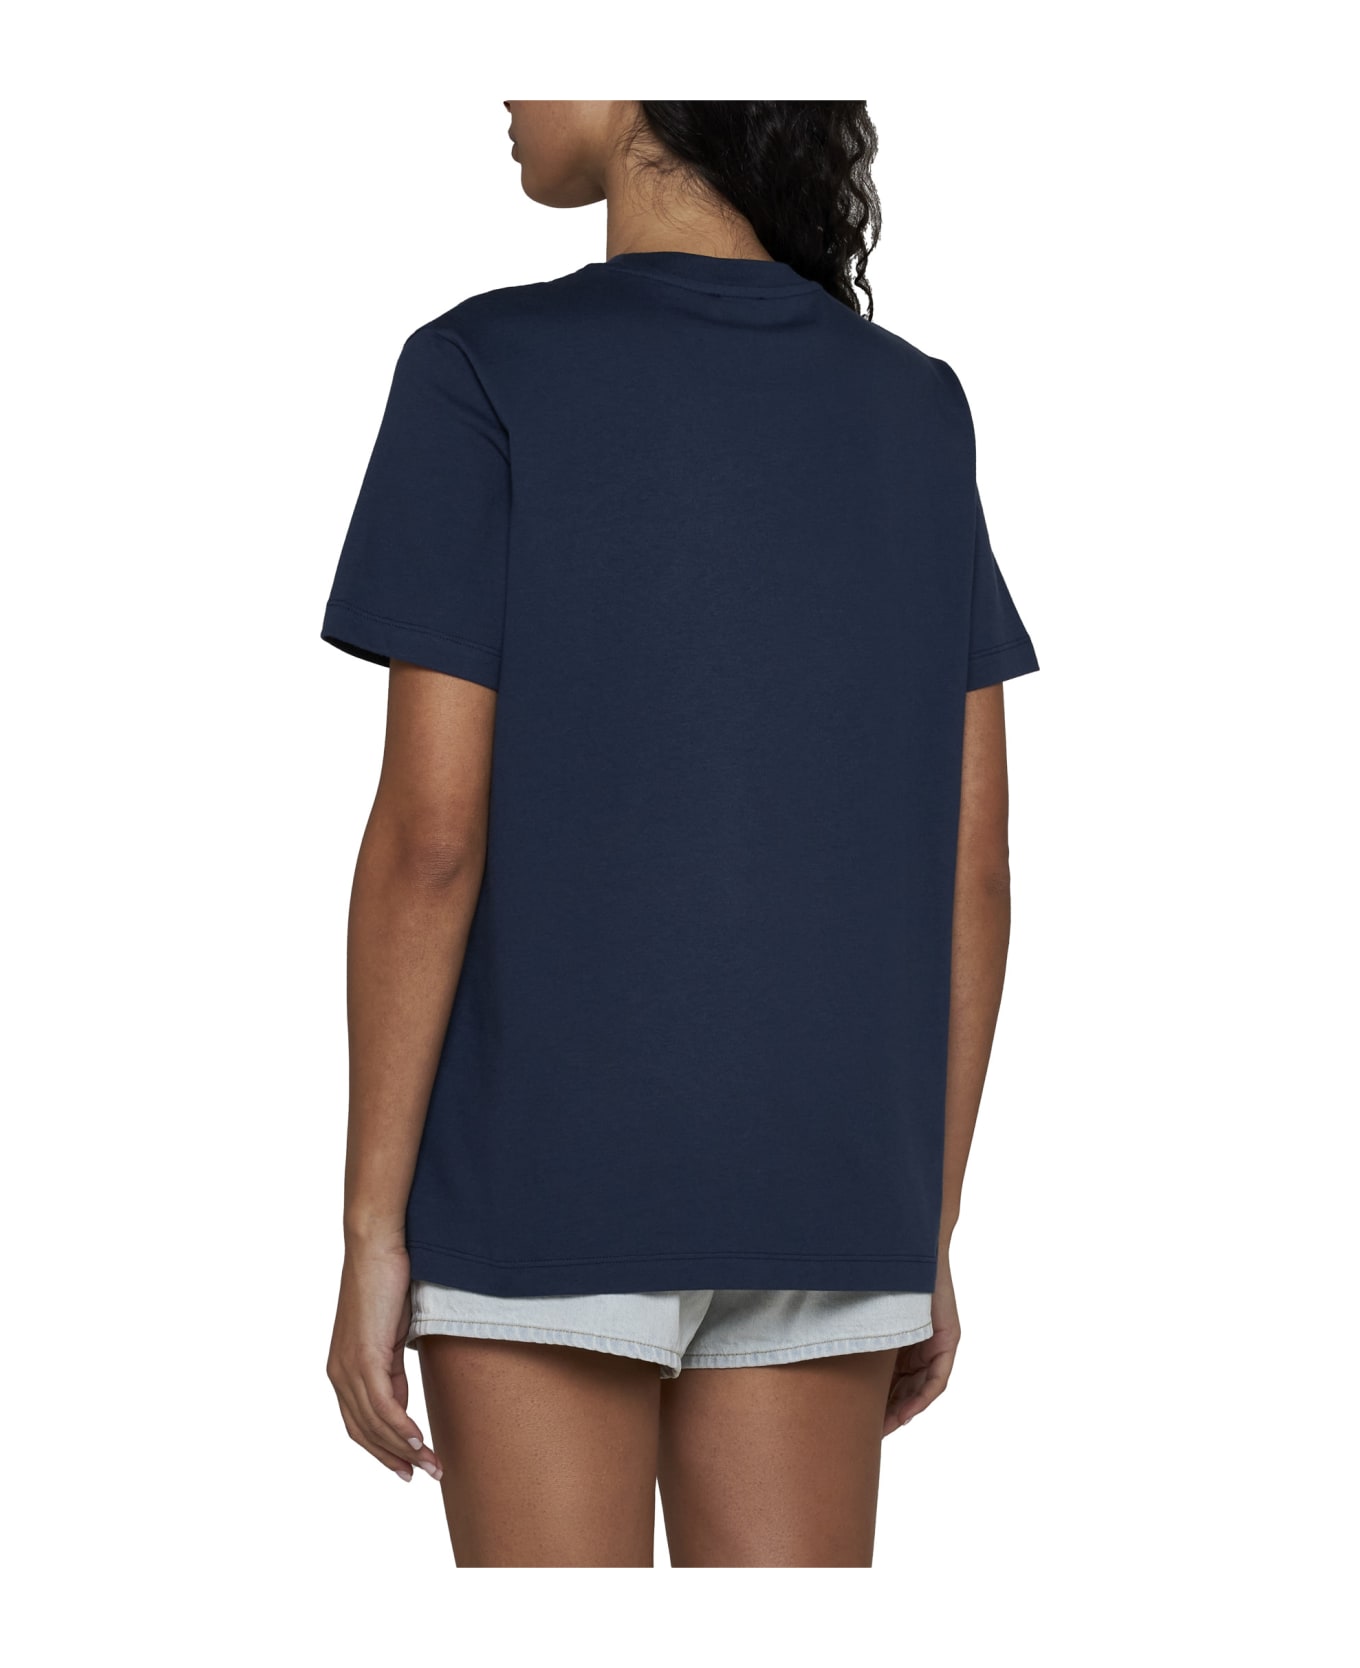 Kenzo T-Shirt - Midnight Tシャツ